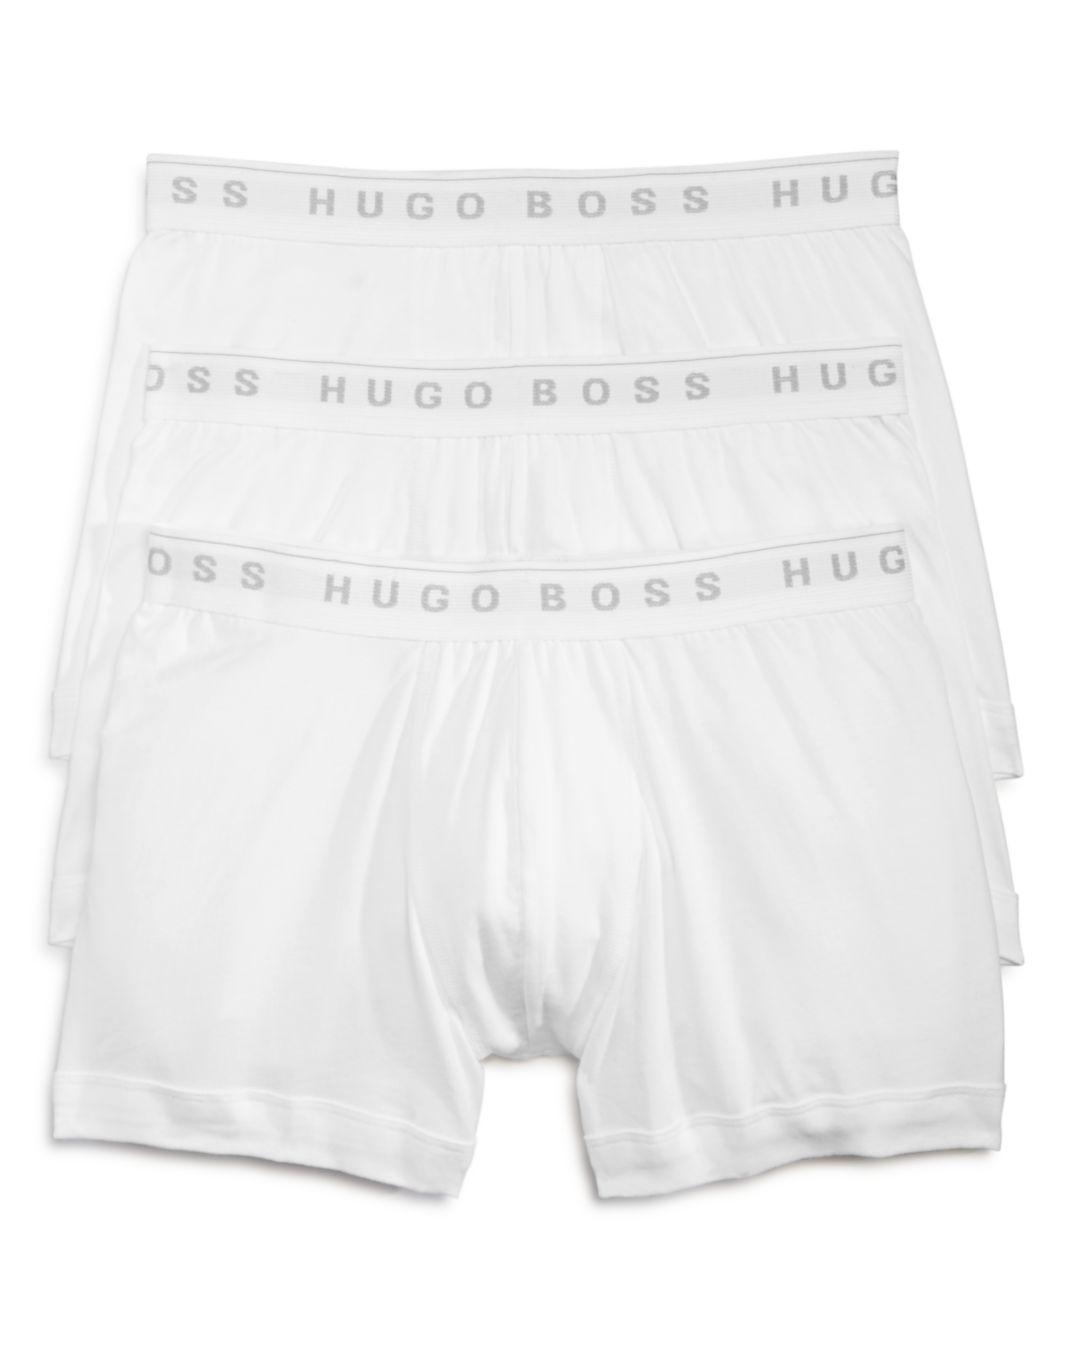 BOSS by Hugo Boss Cotton Boxer Briefs - Pack Of 3 in White for Men - Lyst